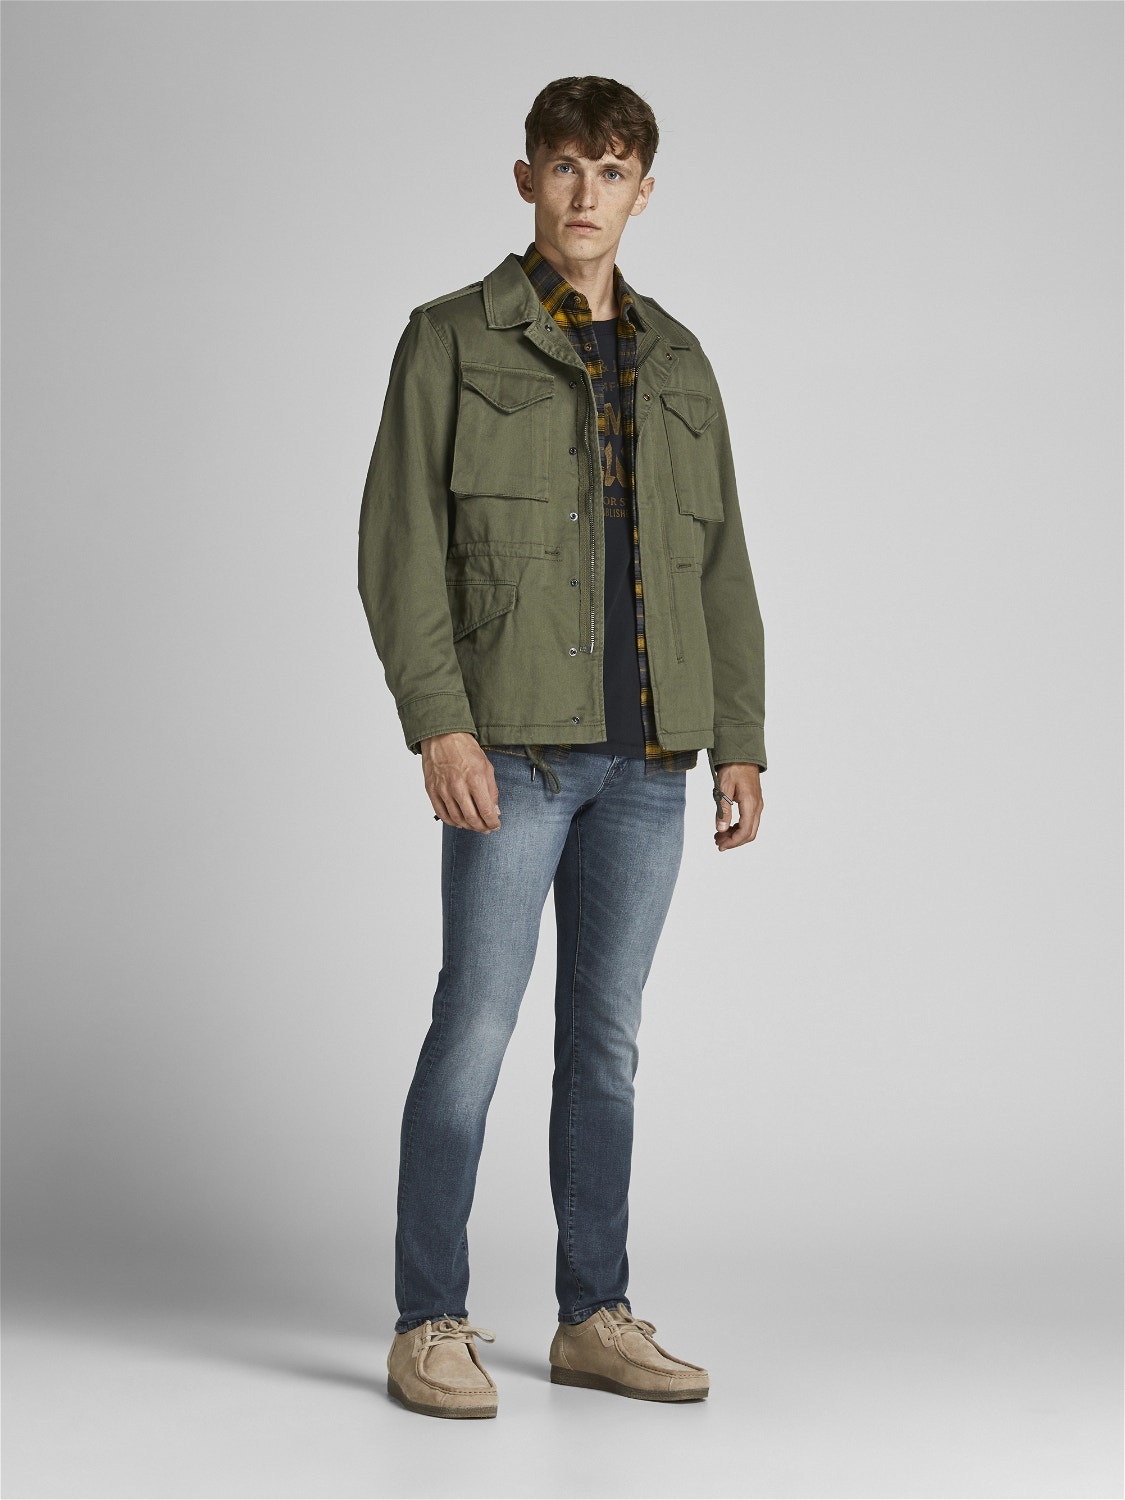 wijsvinger Poëzie Patriottisch Glenn Fox AGI 504 Slim fit jeans | Medium Blue | Jack & Jones®